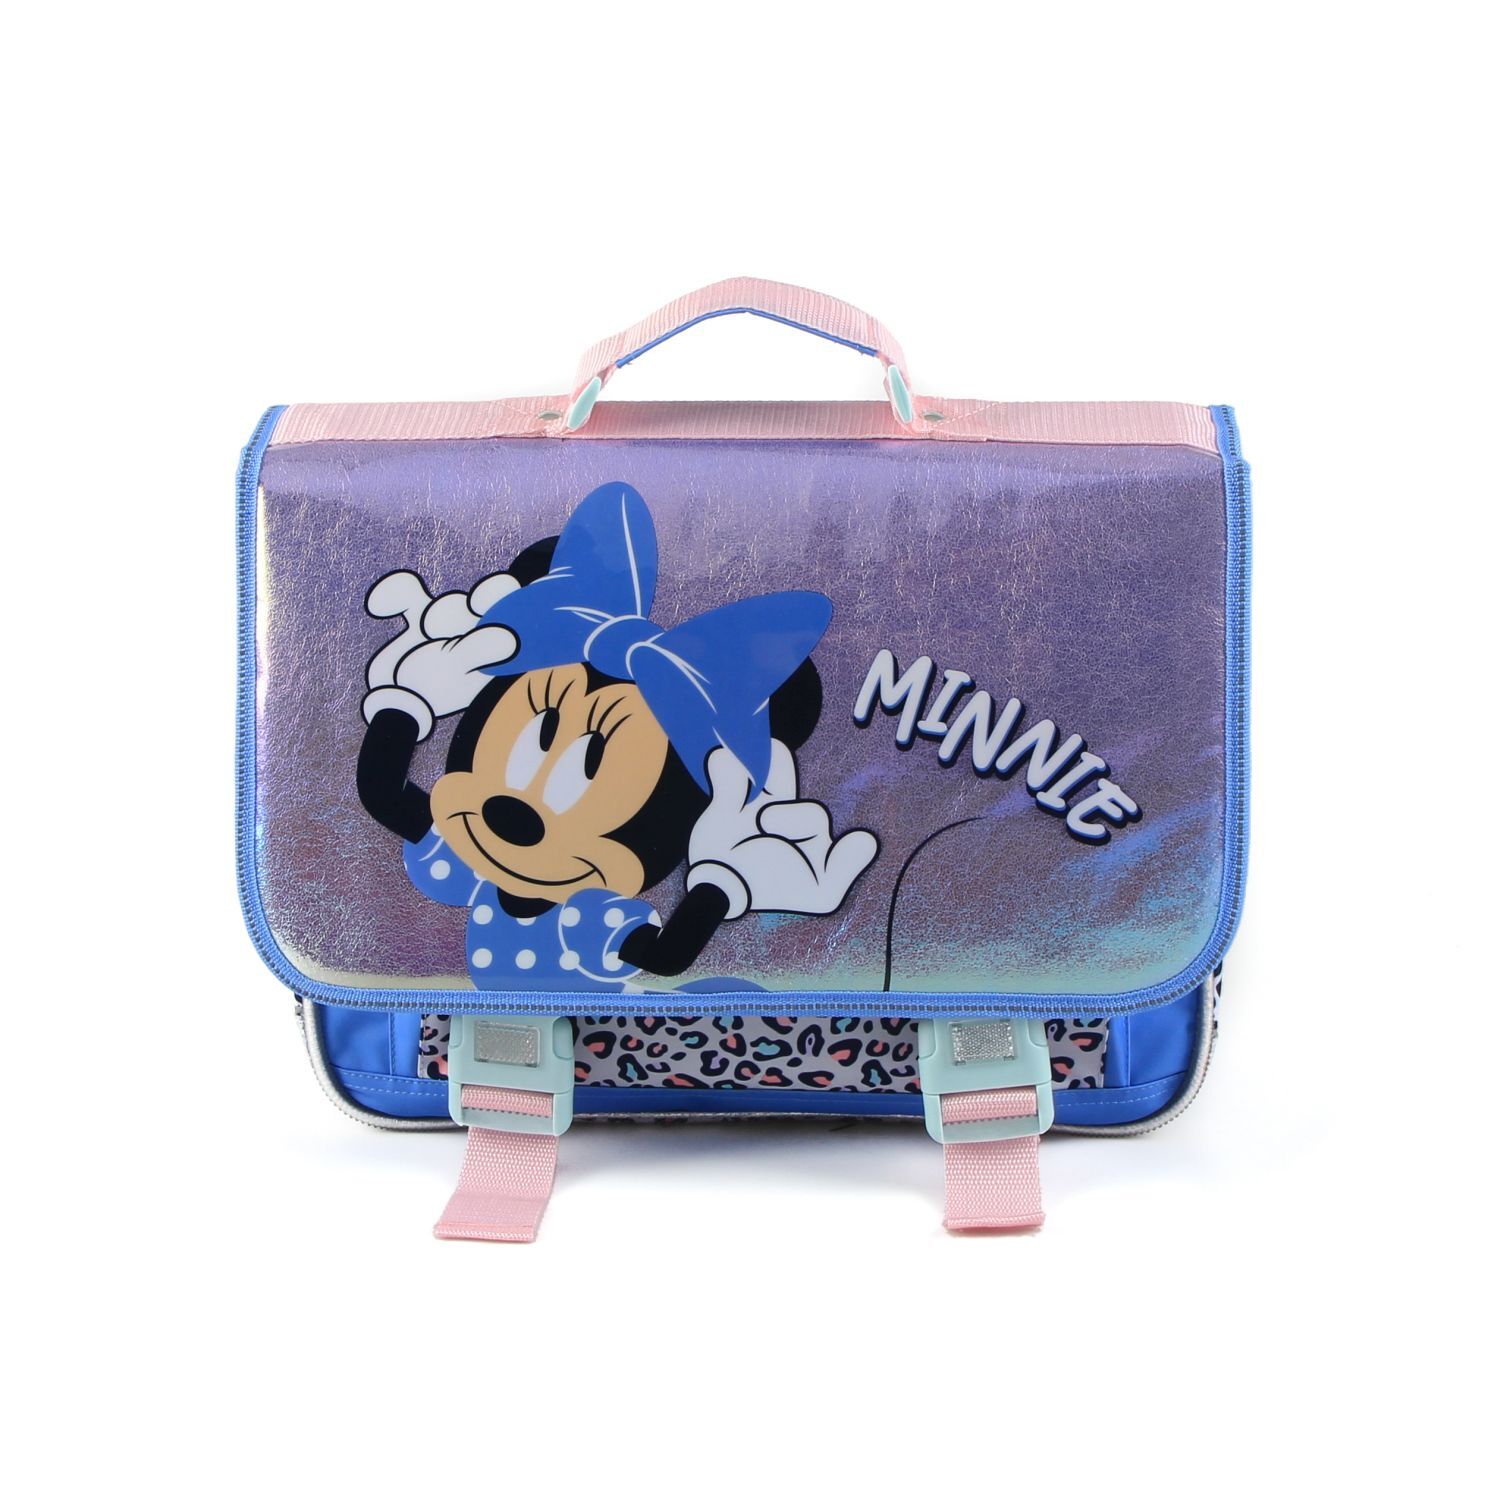 Рюкзак Disney Minnie Mouse Minnie Maus Leopard Schul Blaue Schleife 41cm, синий фотографии